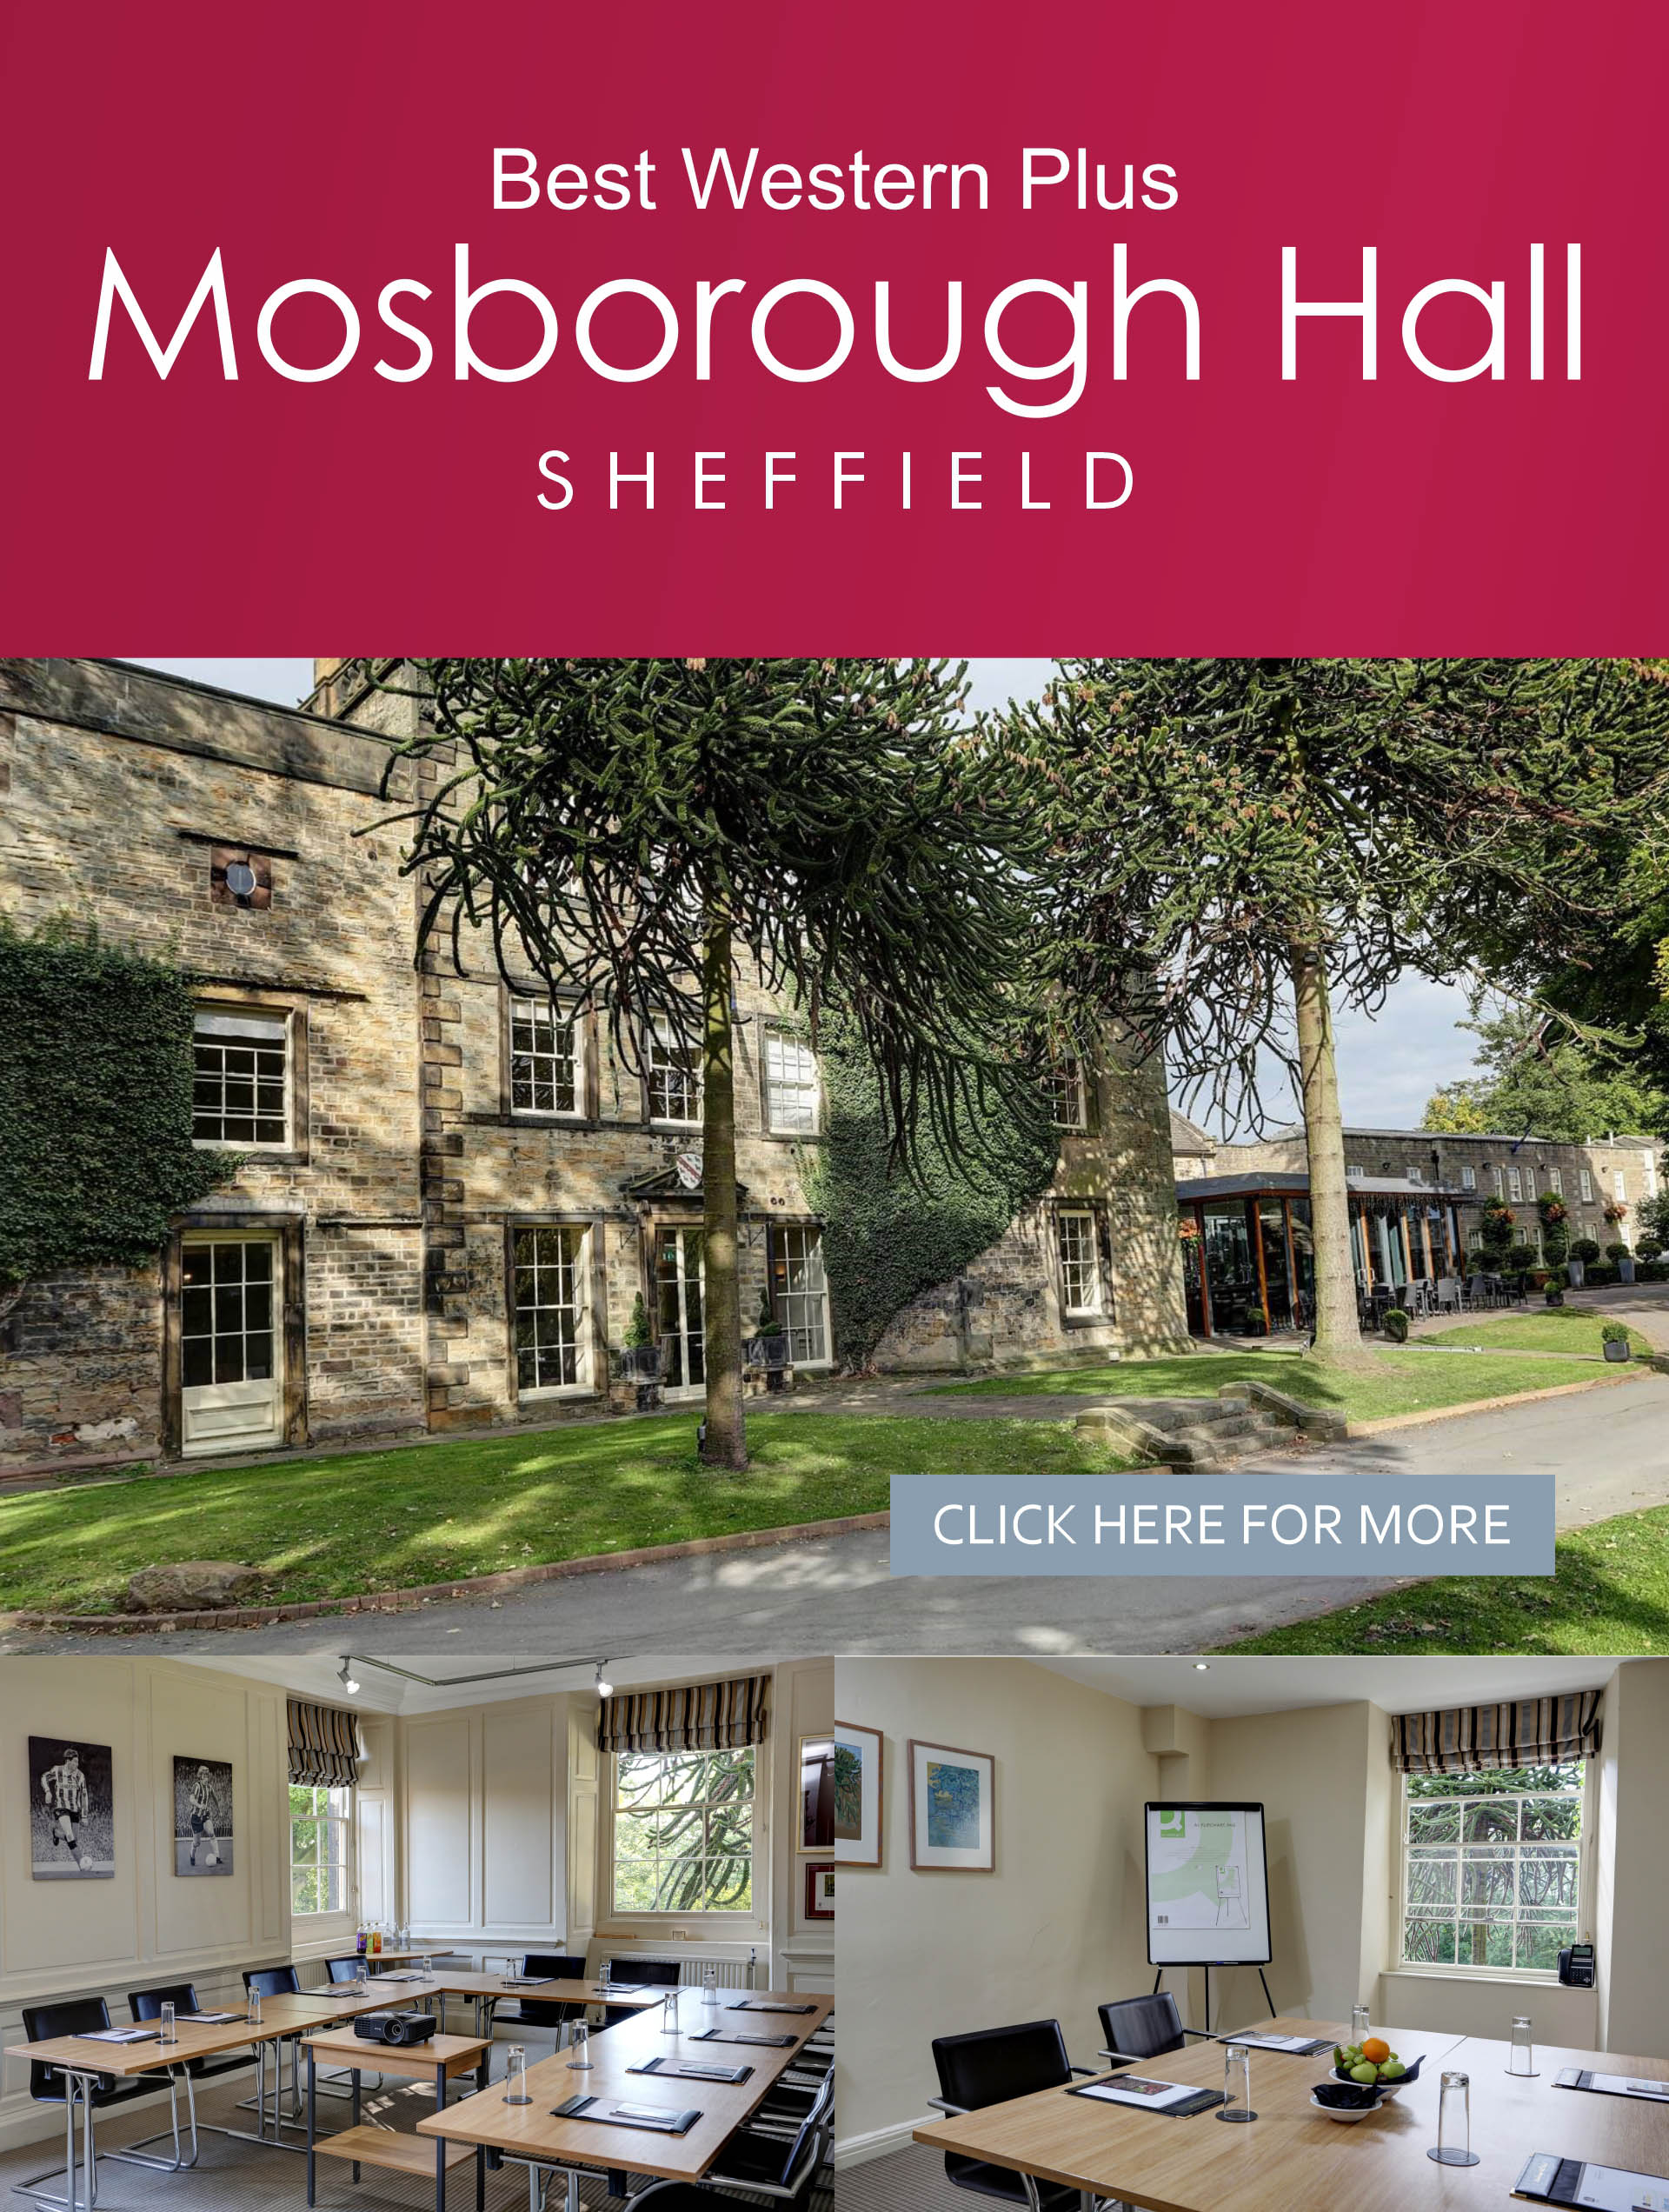 Mosborough Hotel meeting image